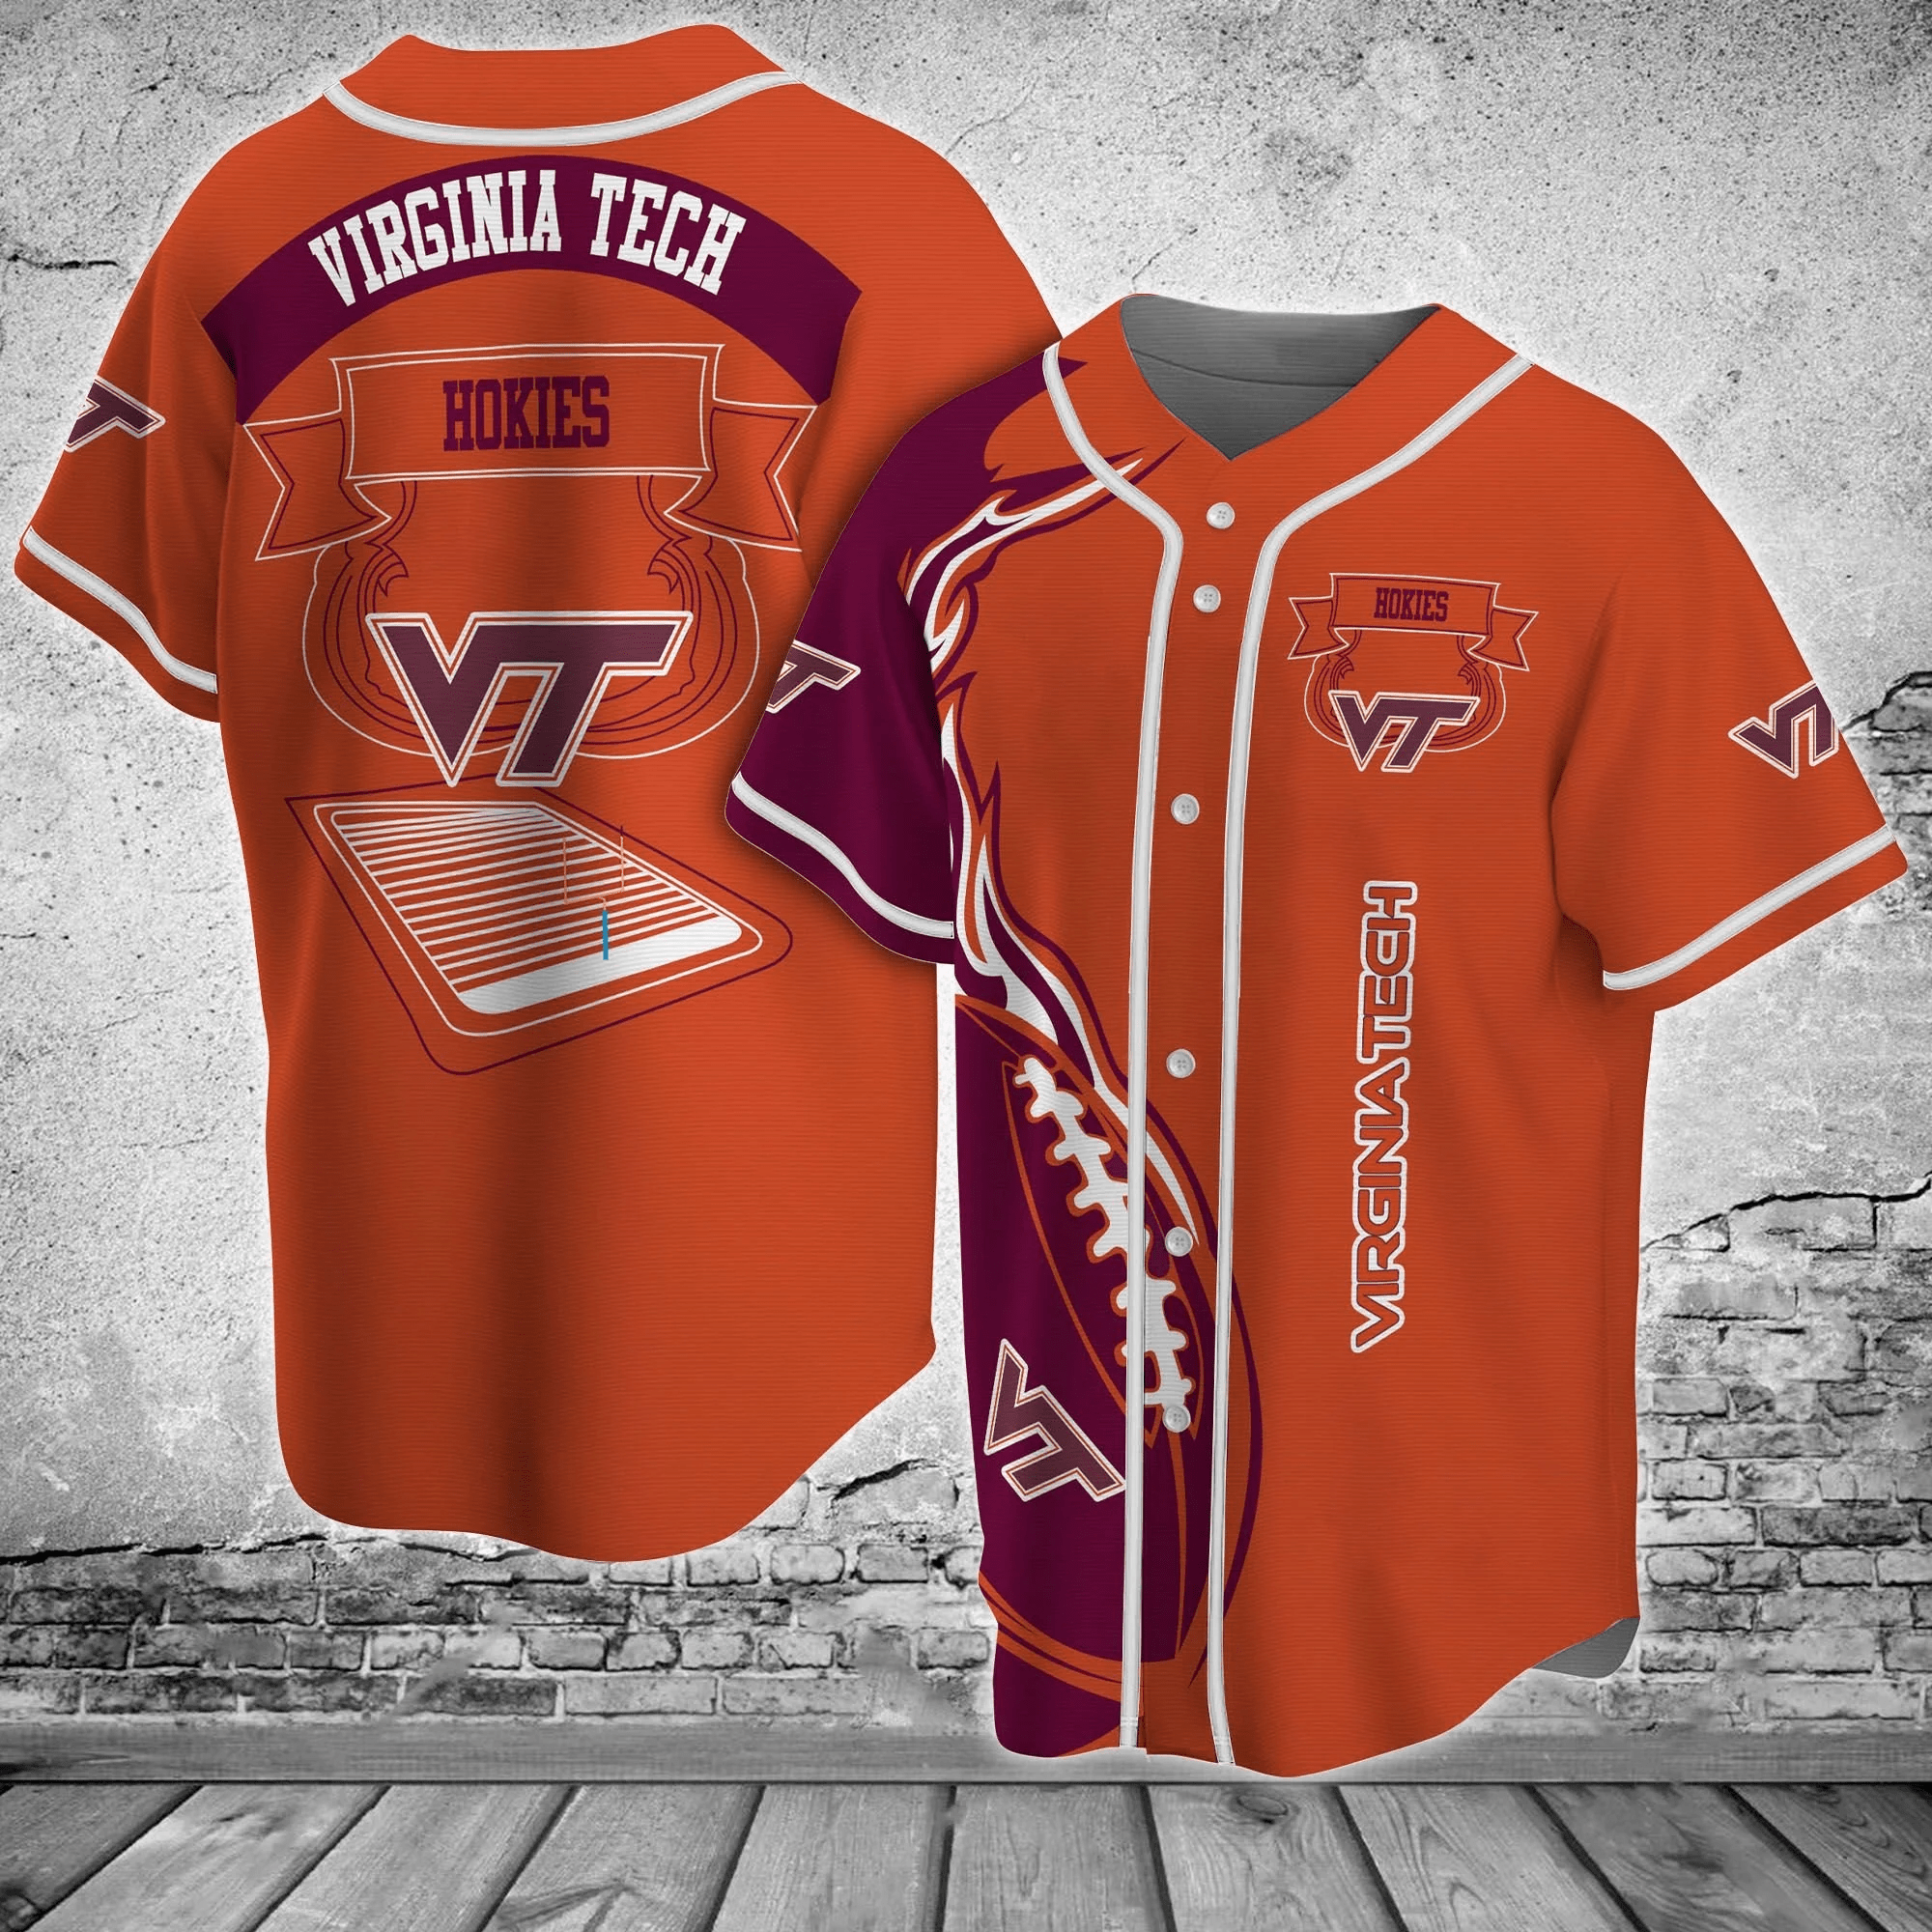 Virginia Tech Hokies NCAA Baseball Jersey Shirt Classic Design FVJ